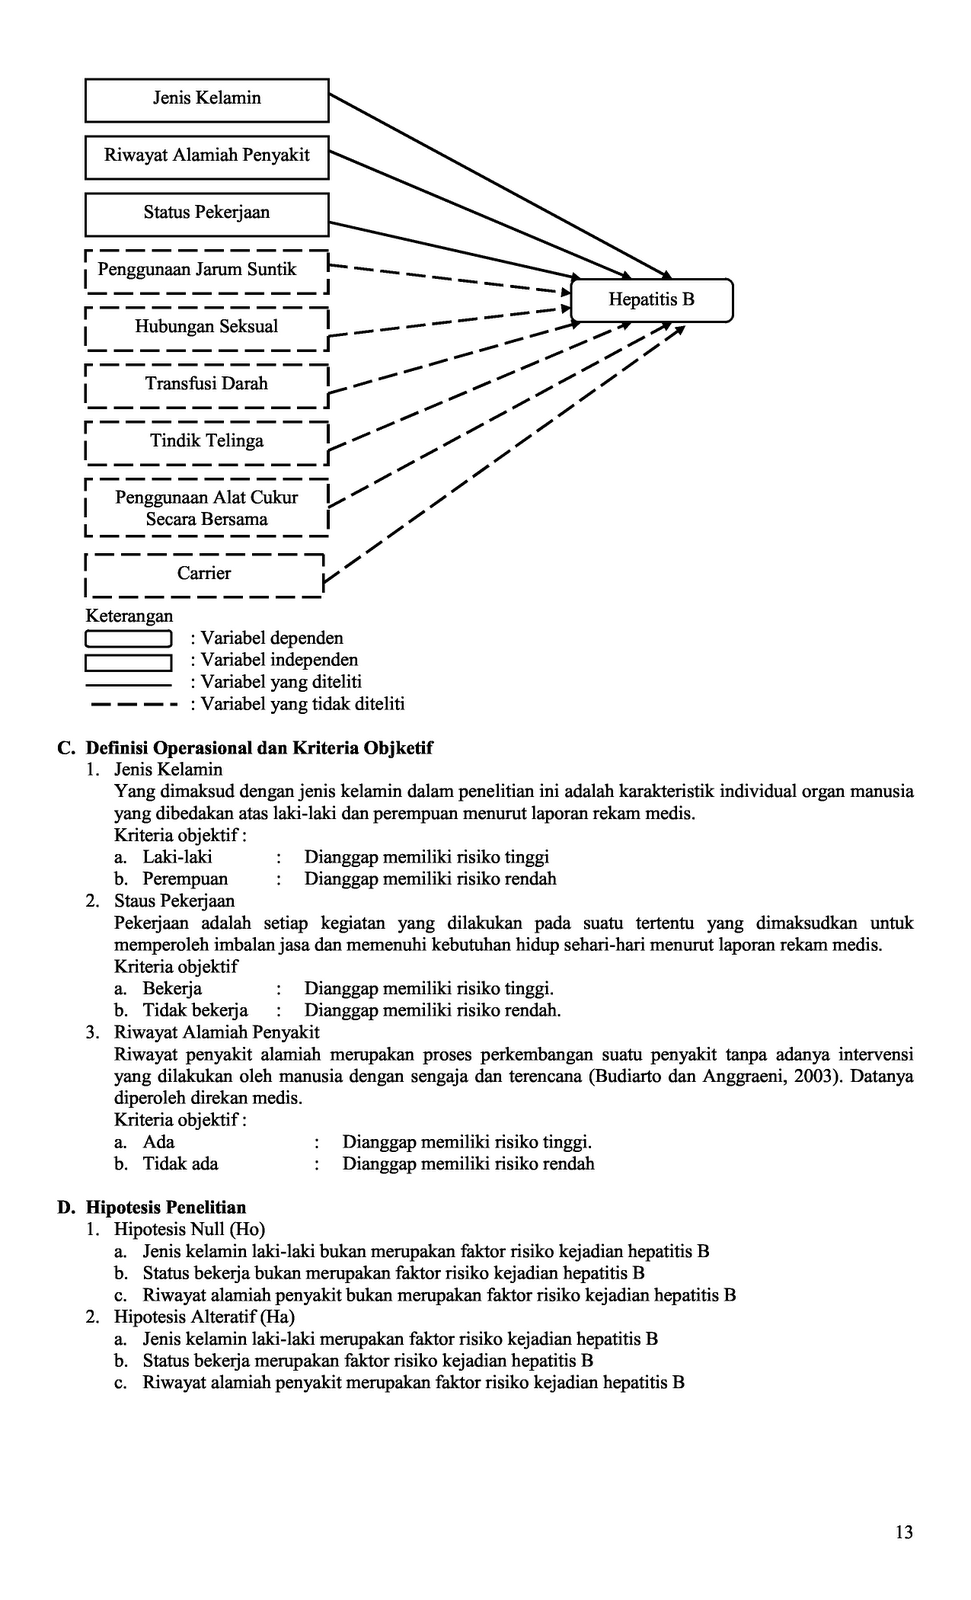 Skripsi kesehatan masyarakat jurusan gizi pdf zip